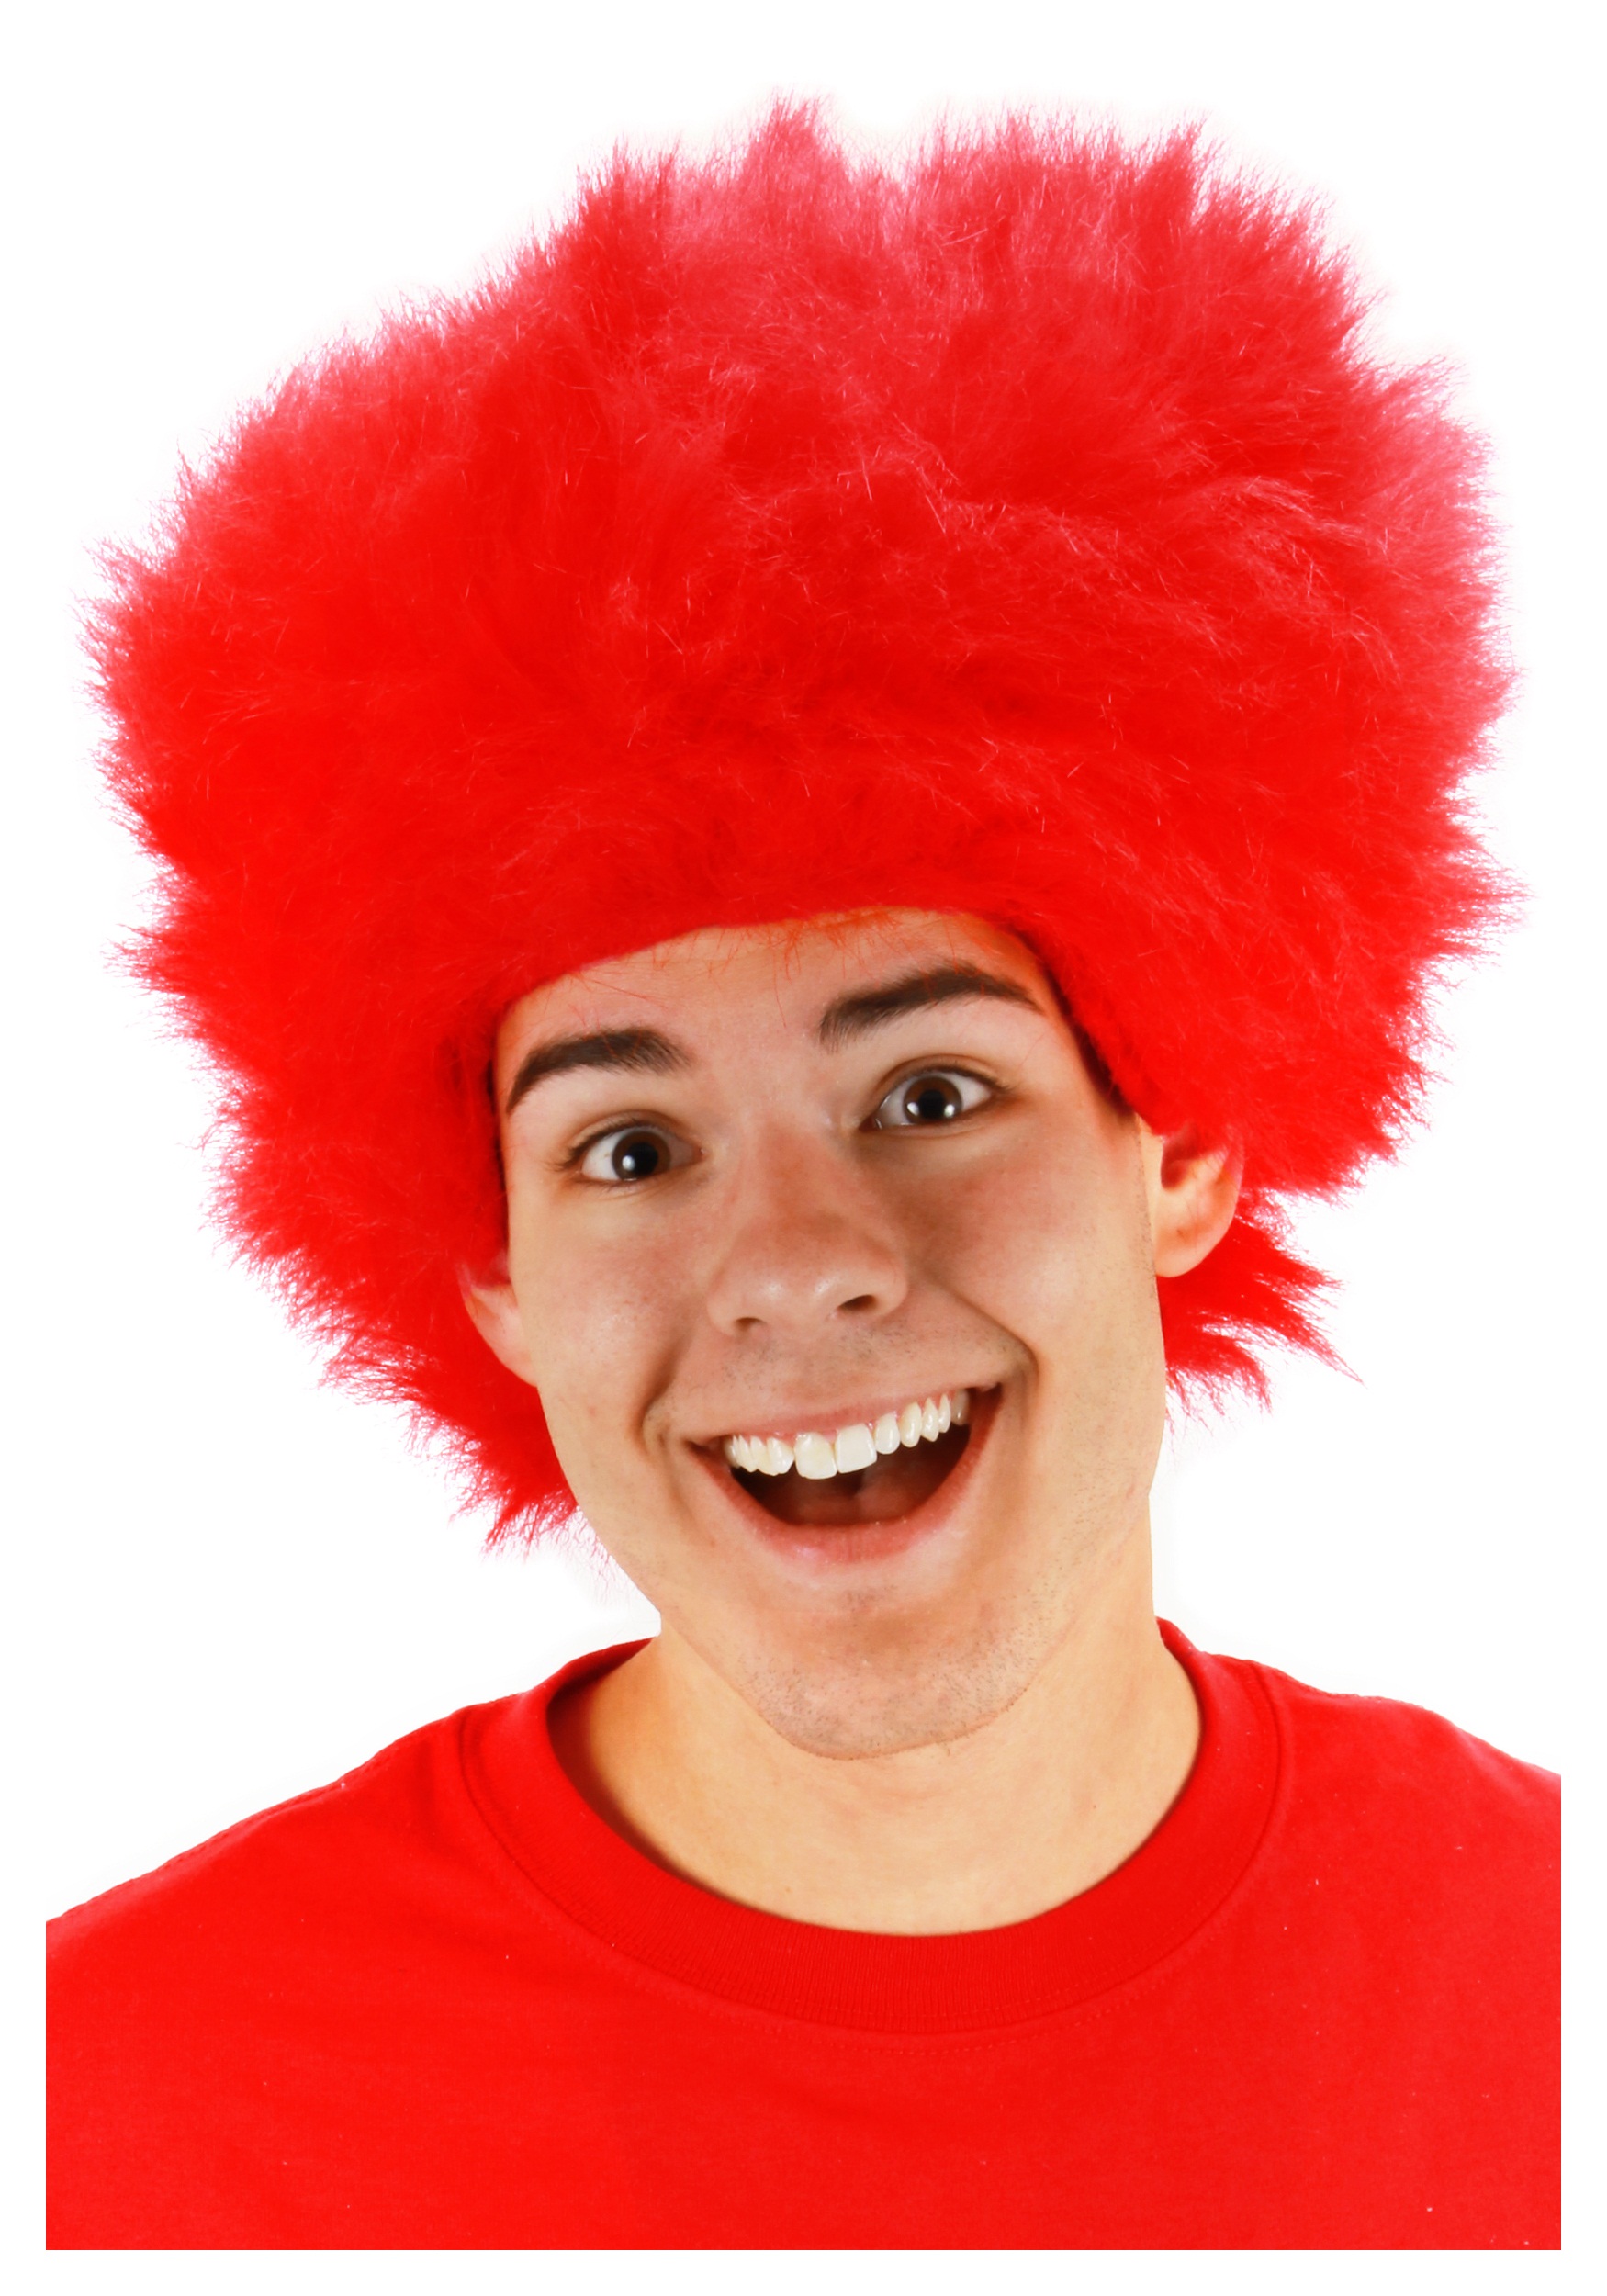 Fuzzy Red Wig - Halloween Costume Ideas 2019